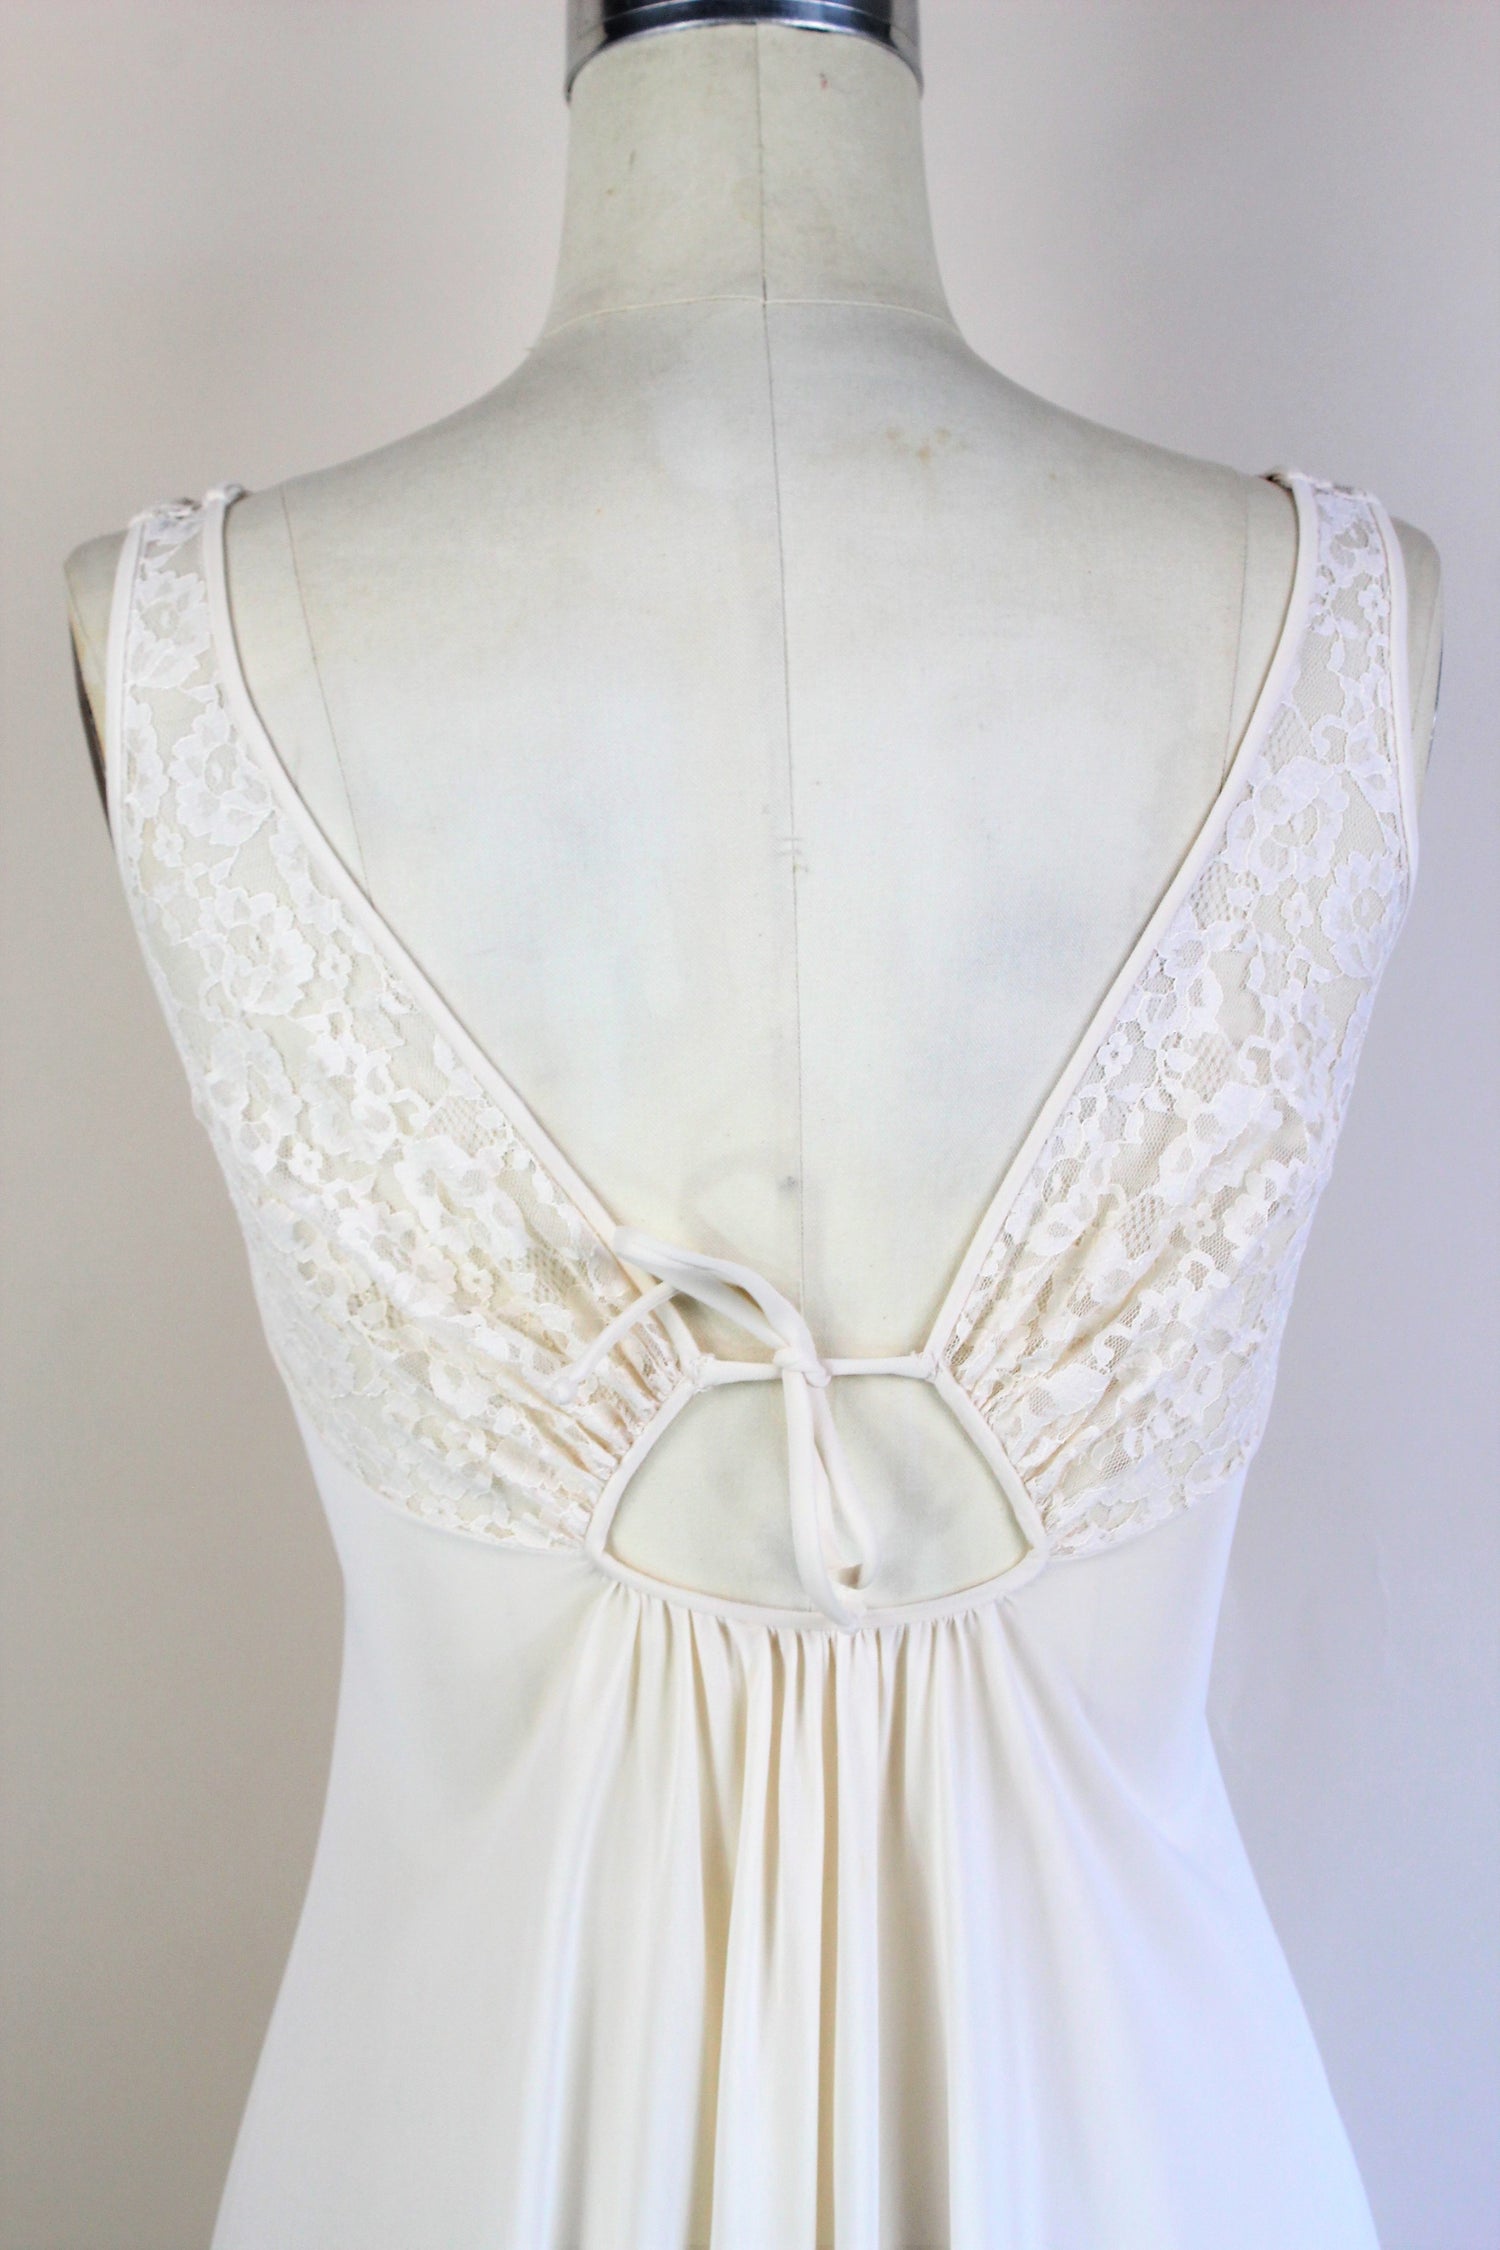 Vintage 1970s White Nightgown By Olga